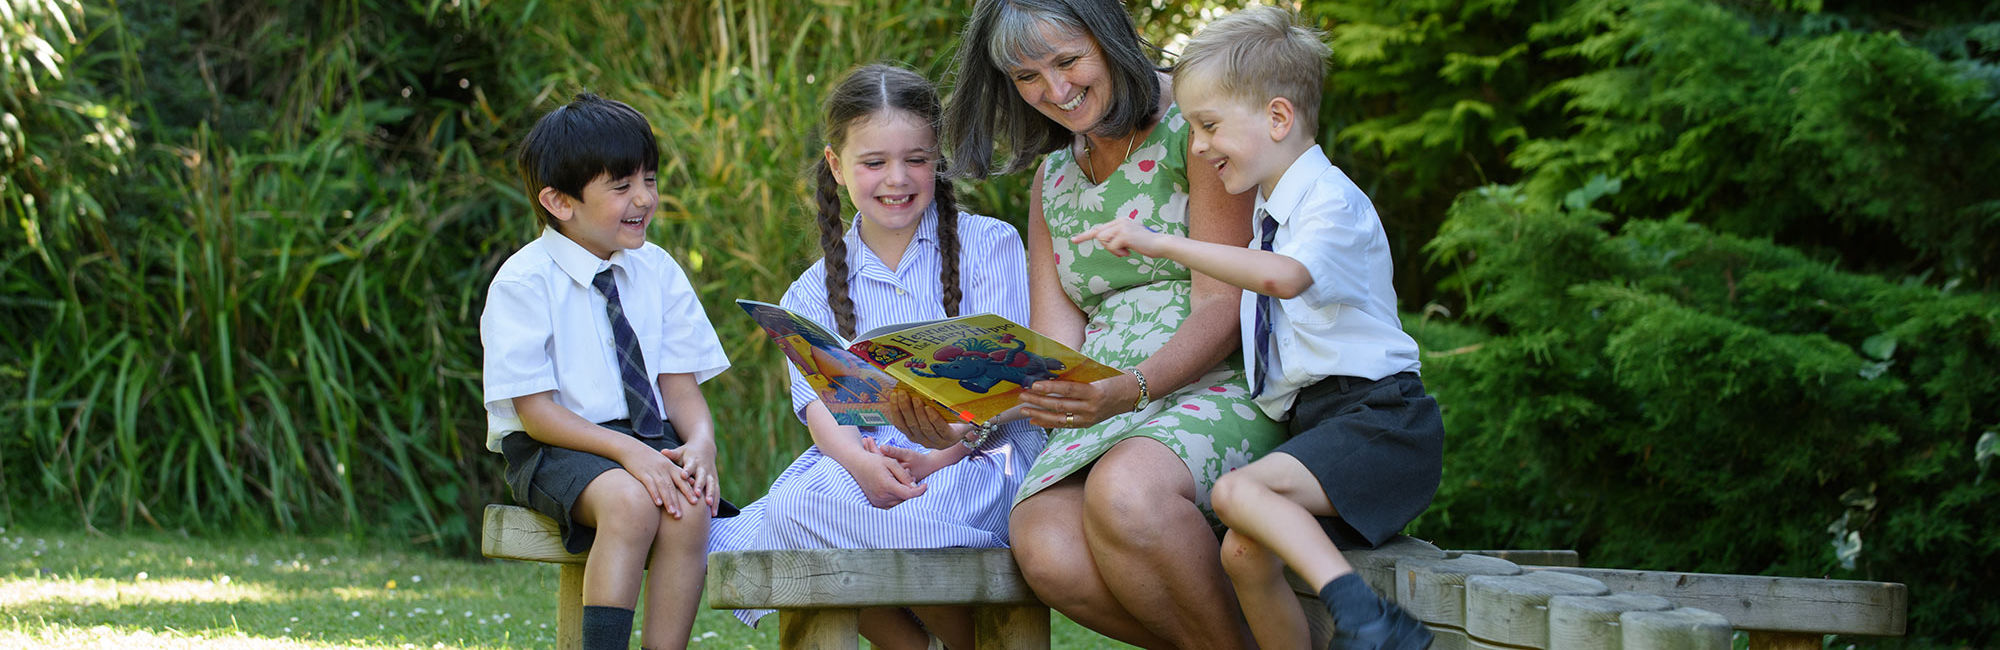 wycliffe teacher and nursery pupils reading a book outdoors